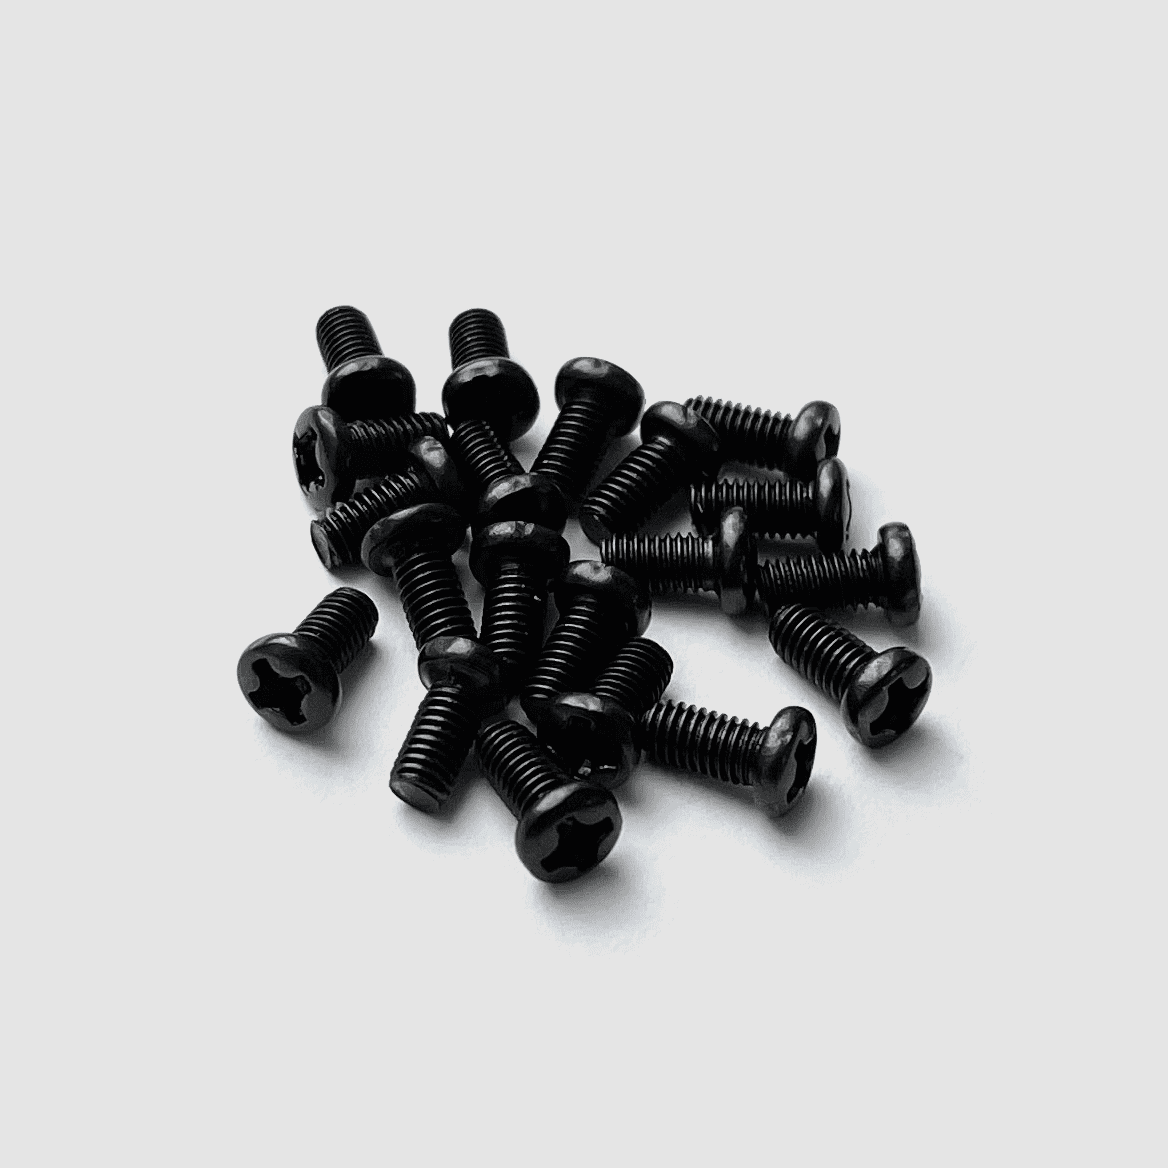 Black M3 screws 20pcs